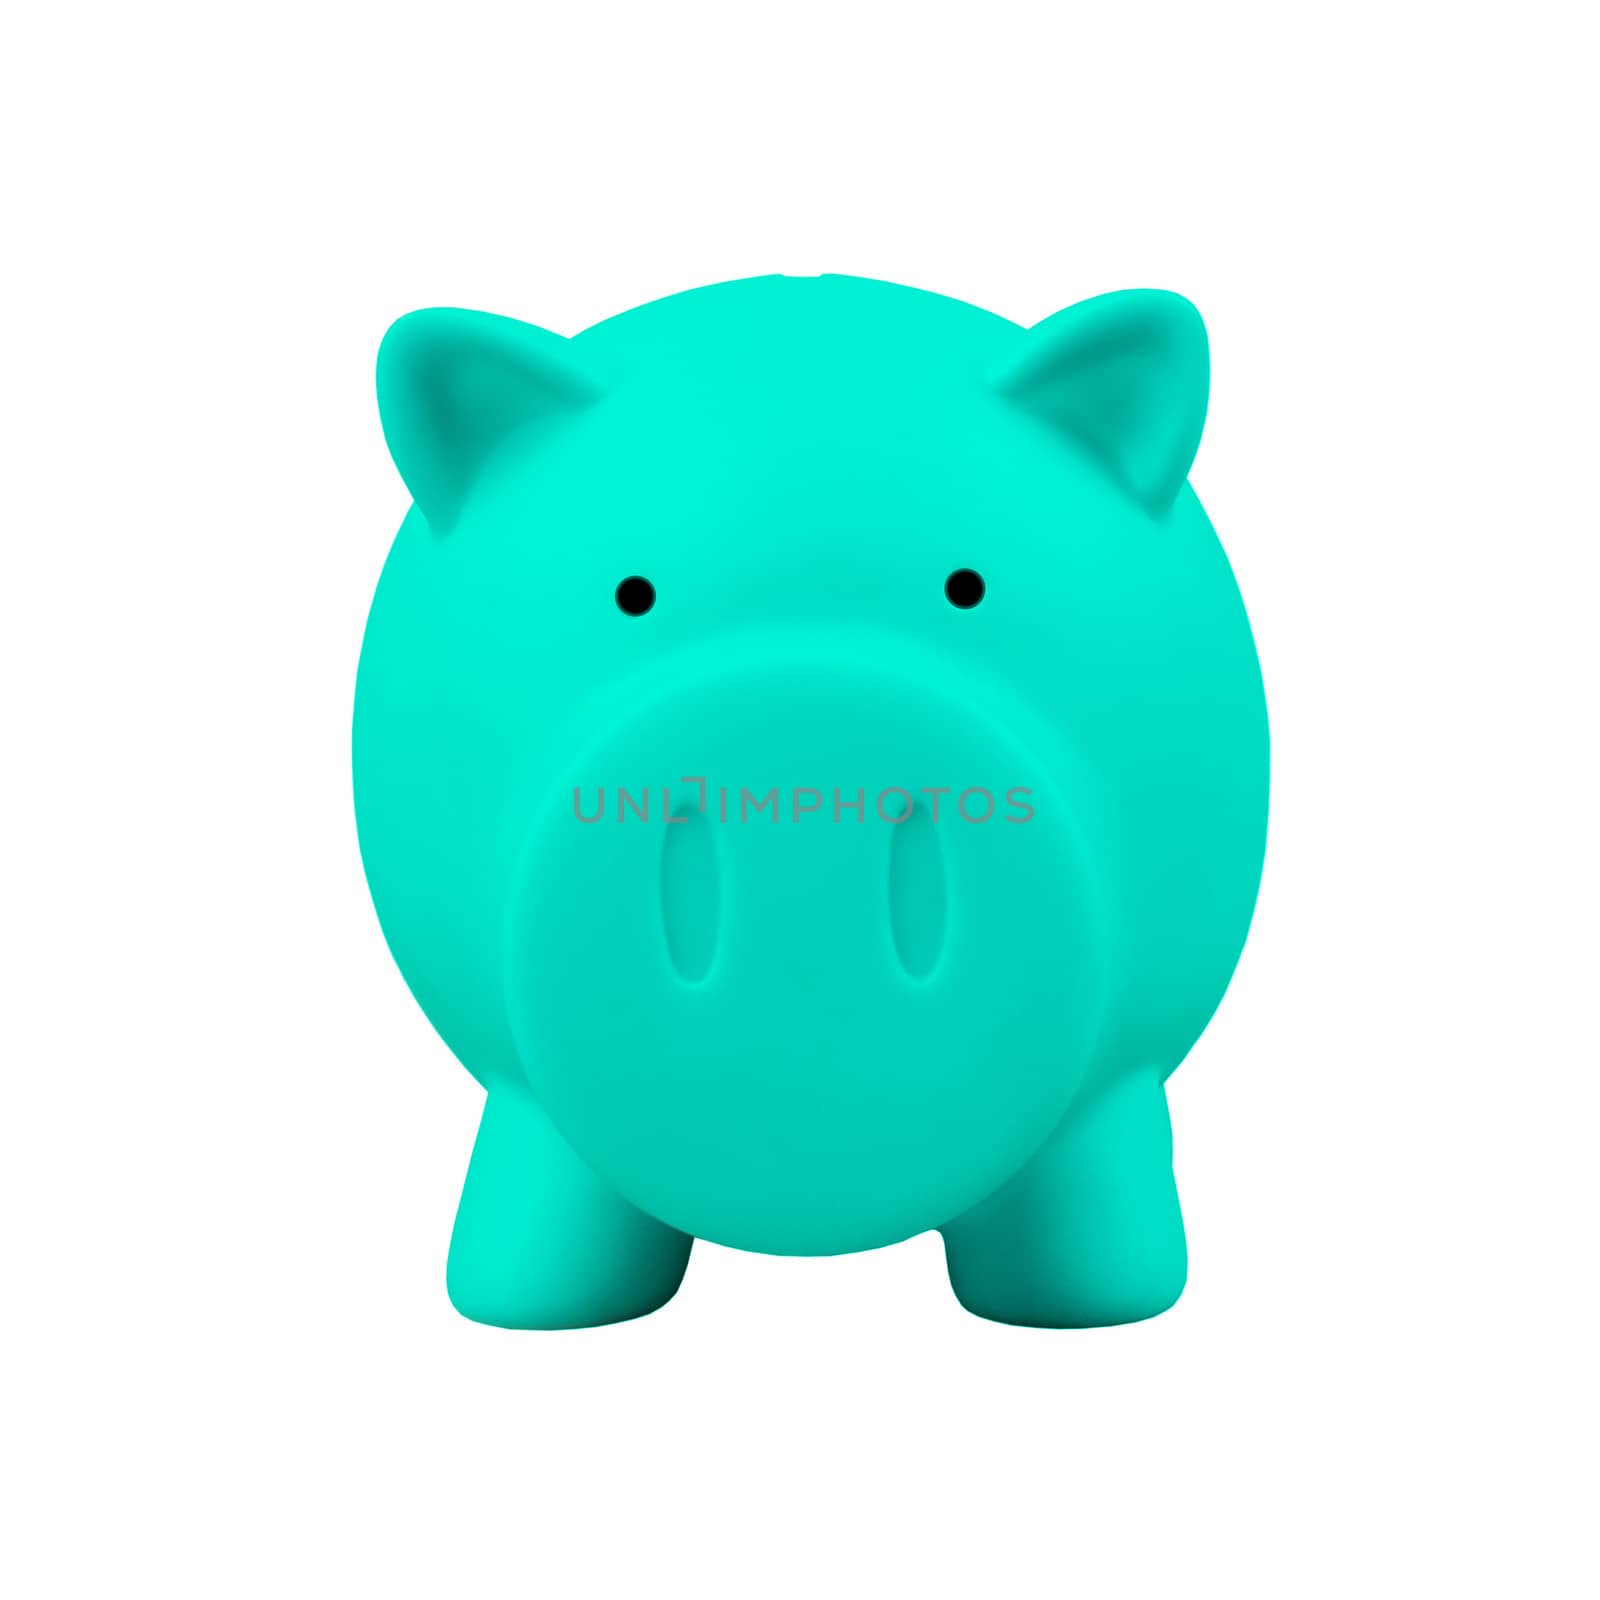 Piggy bank on white background by FrameAngel